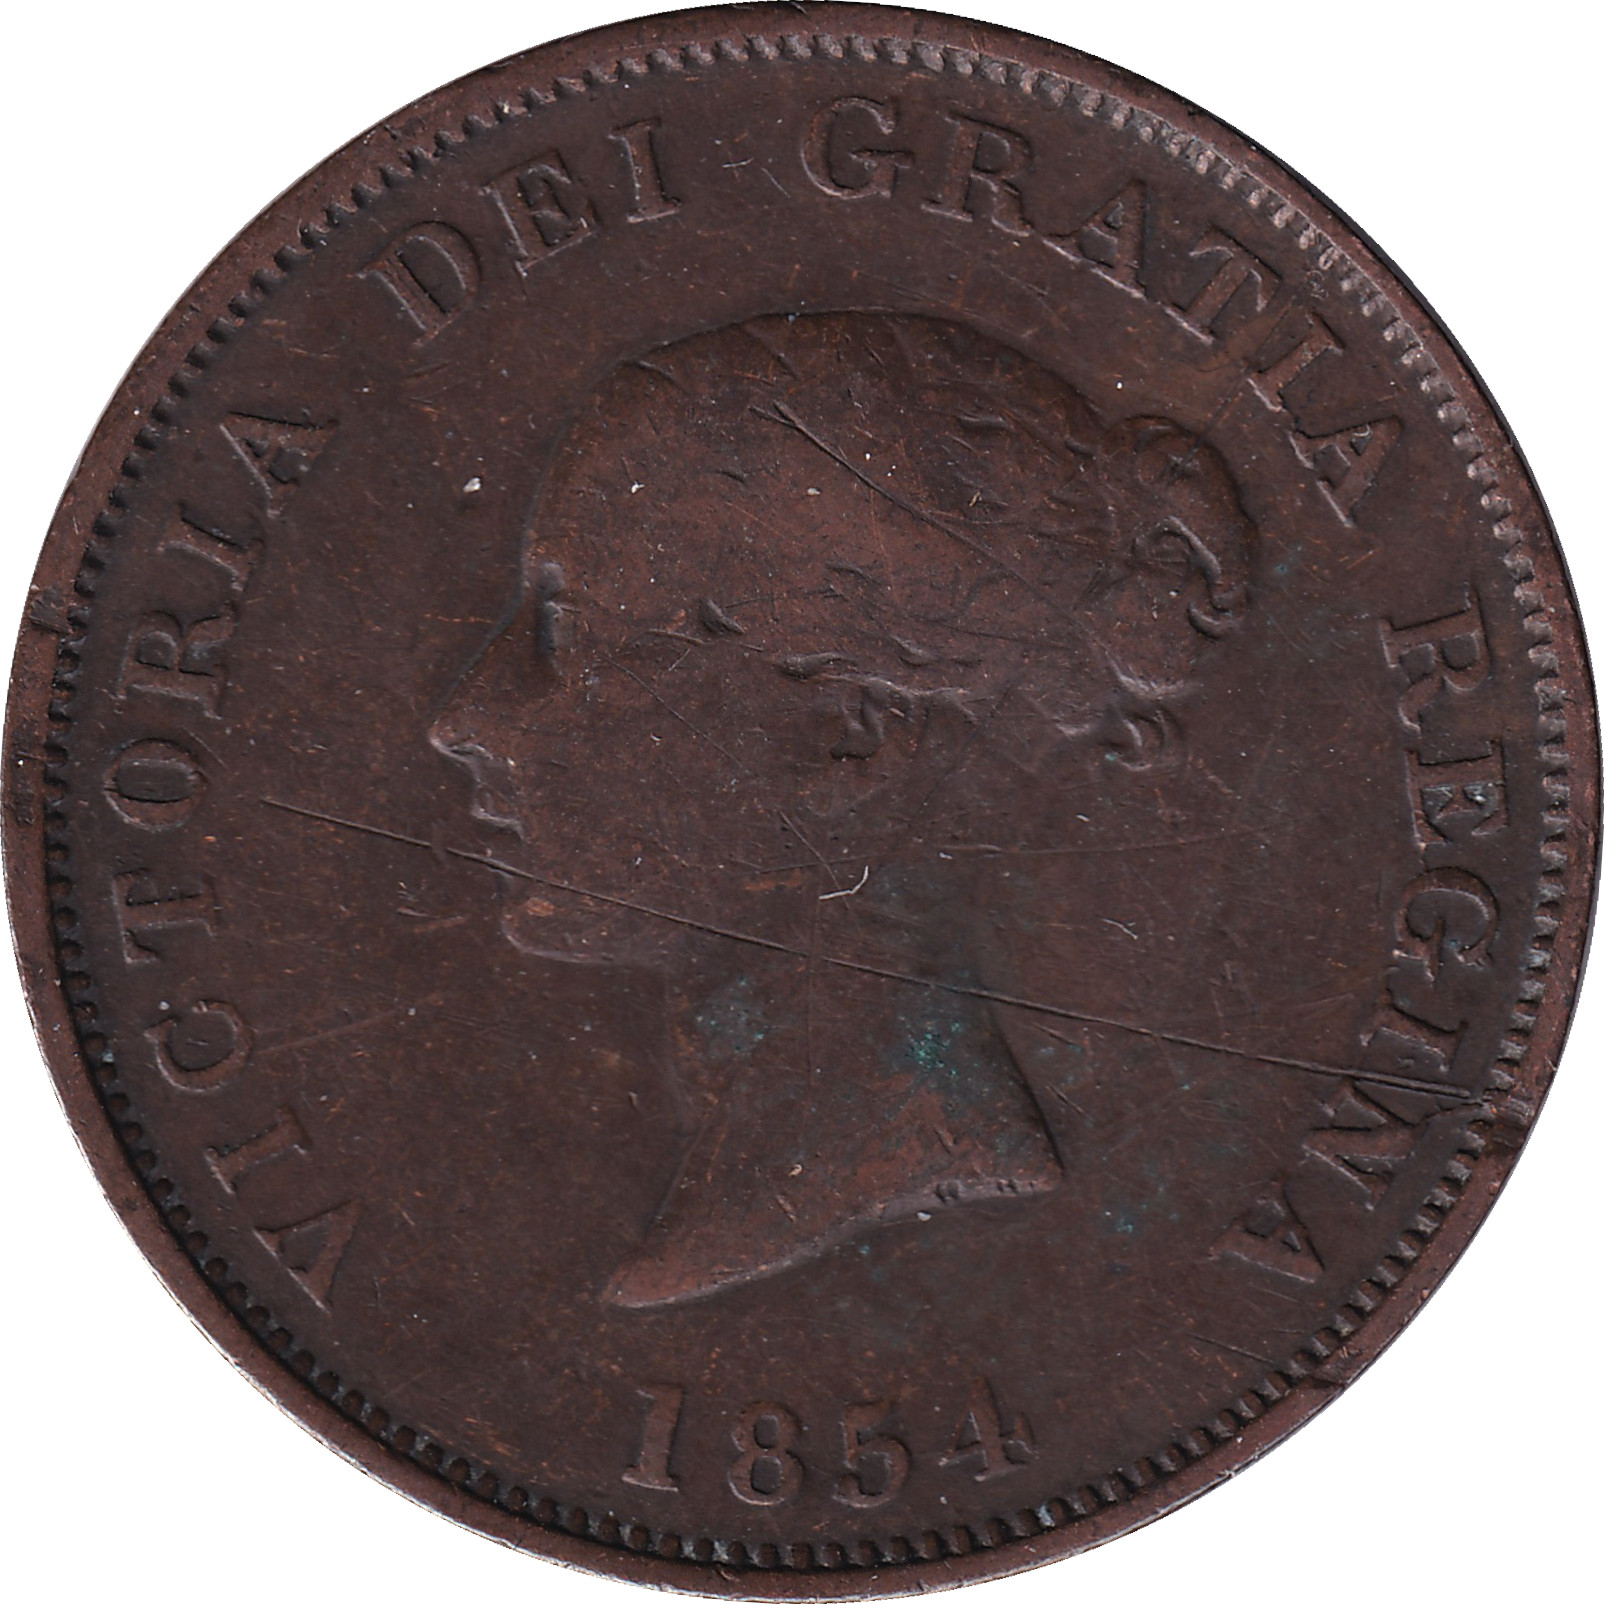 1 penny - Victoria - Mature head